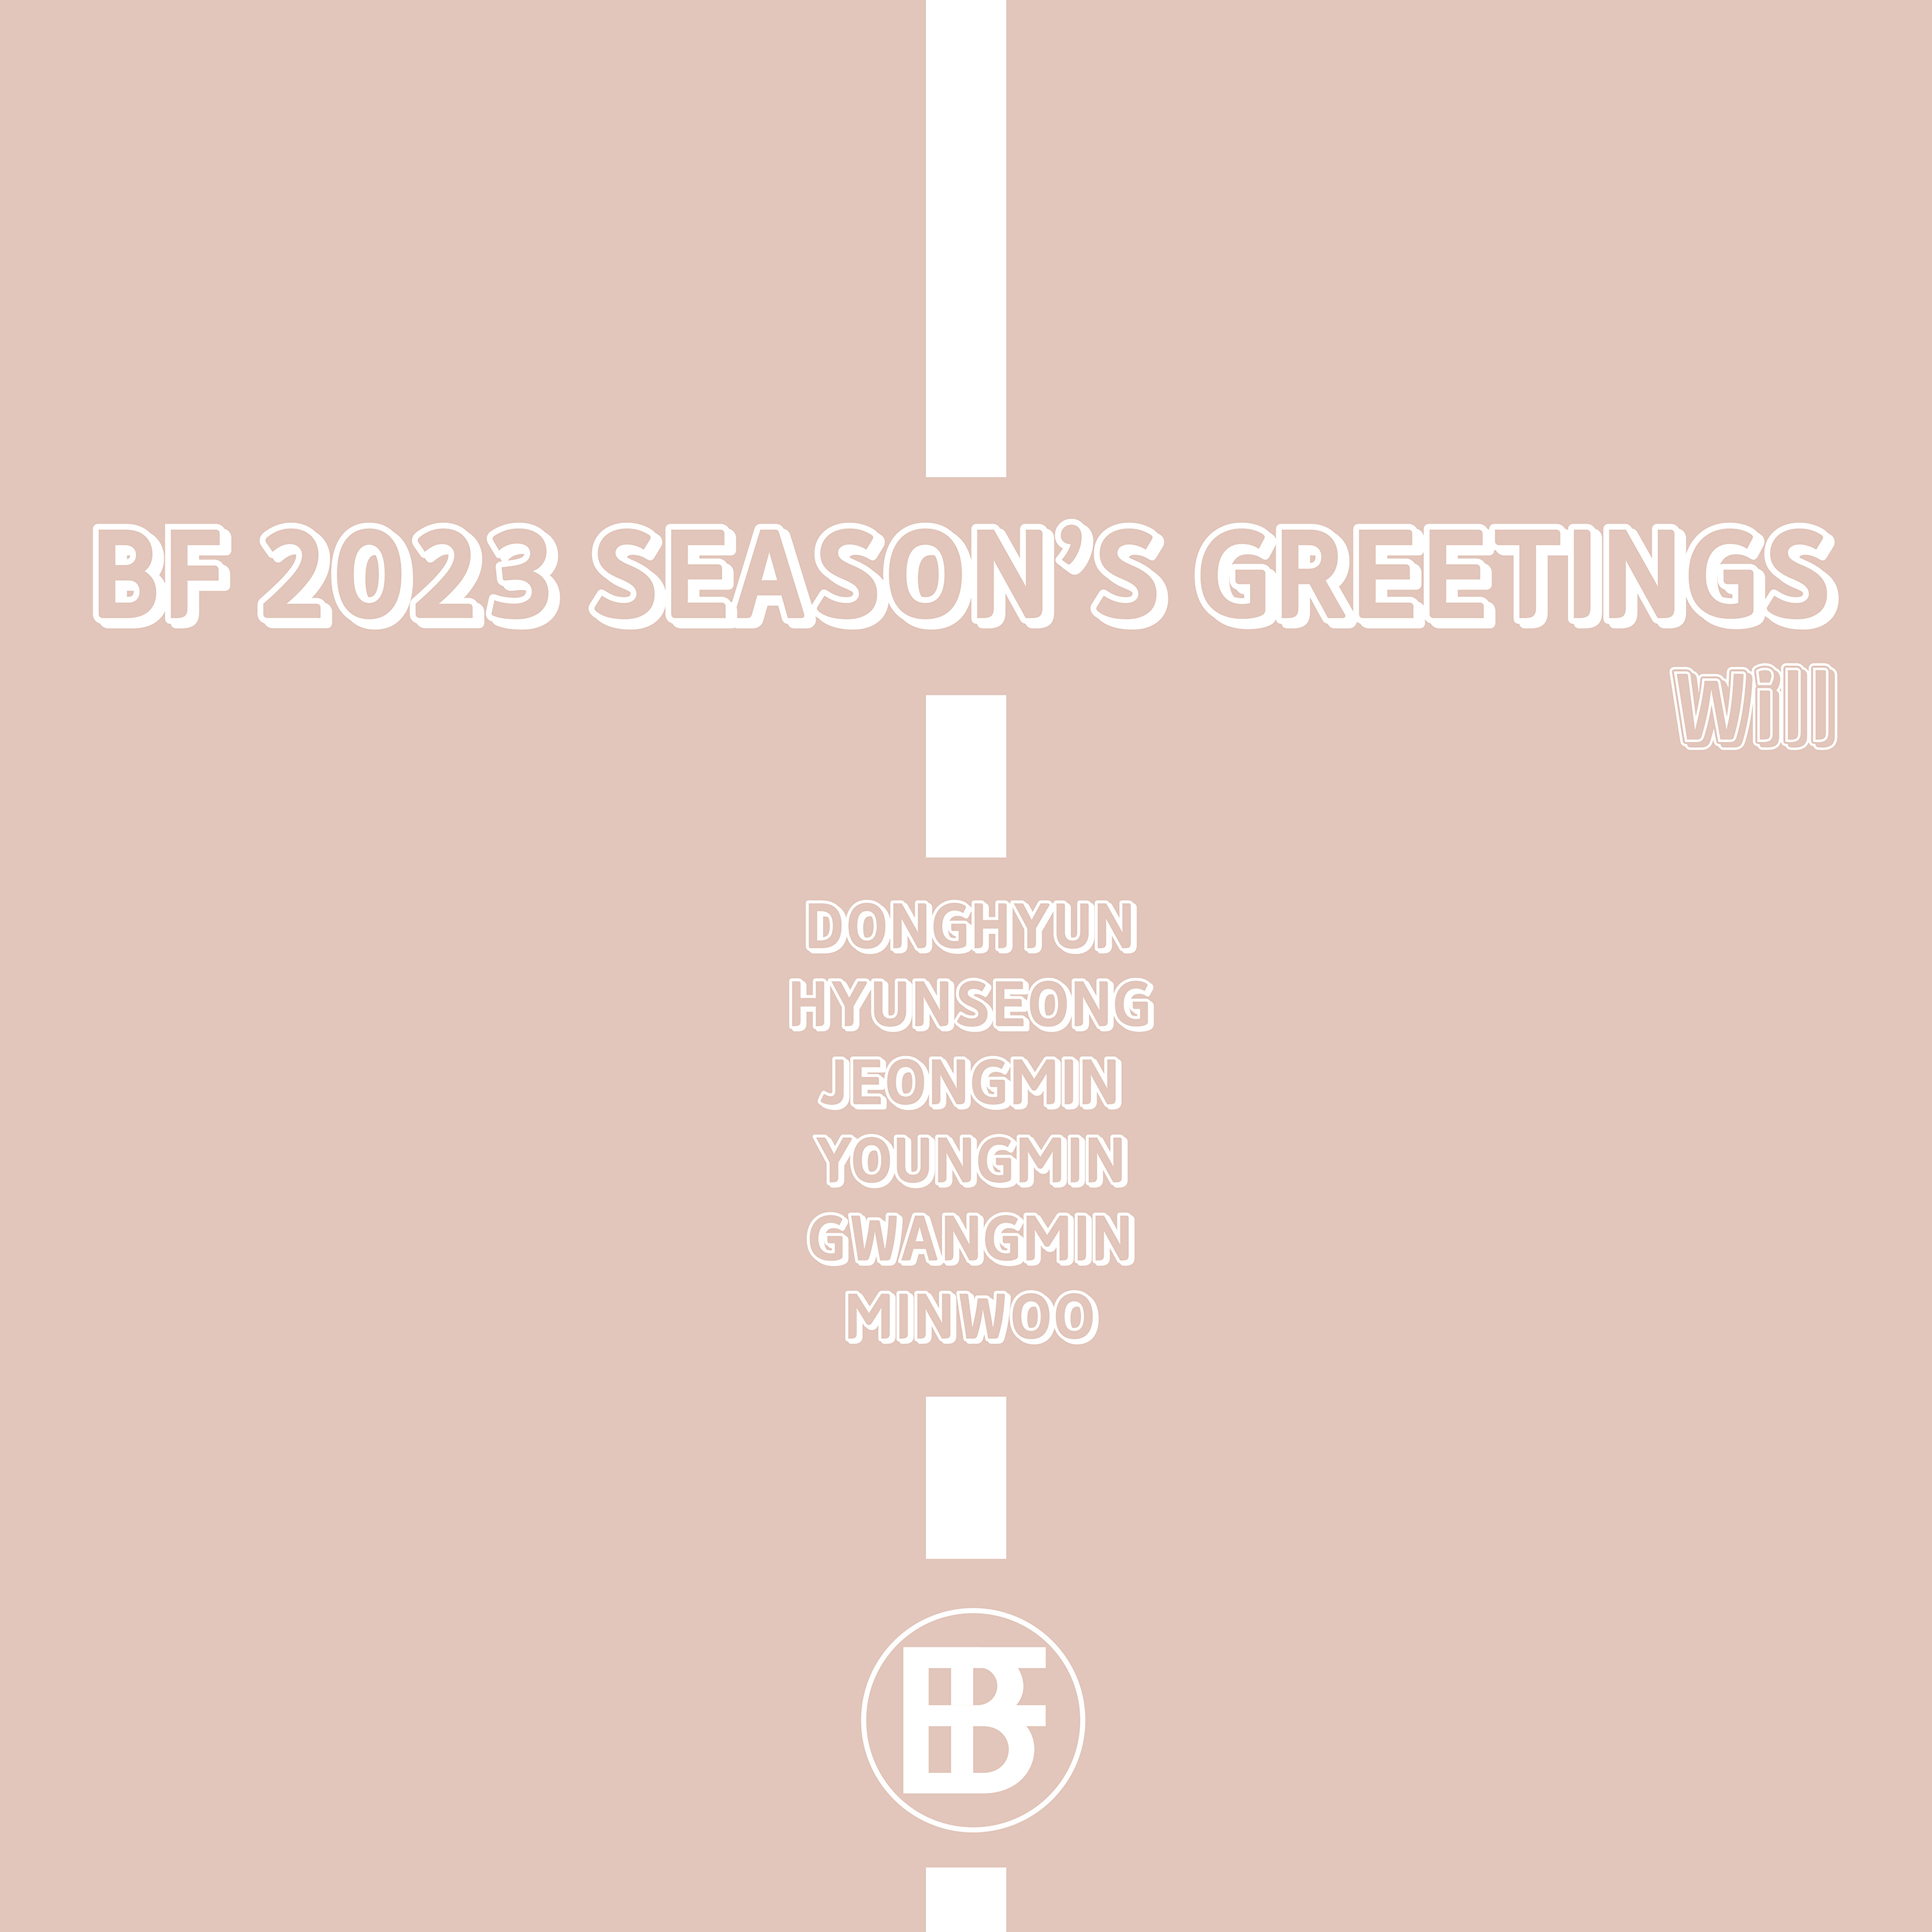 BF - 2023 SEASON'S GREETINGS [Will]